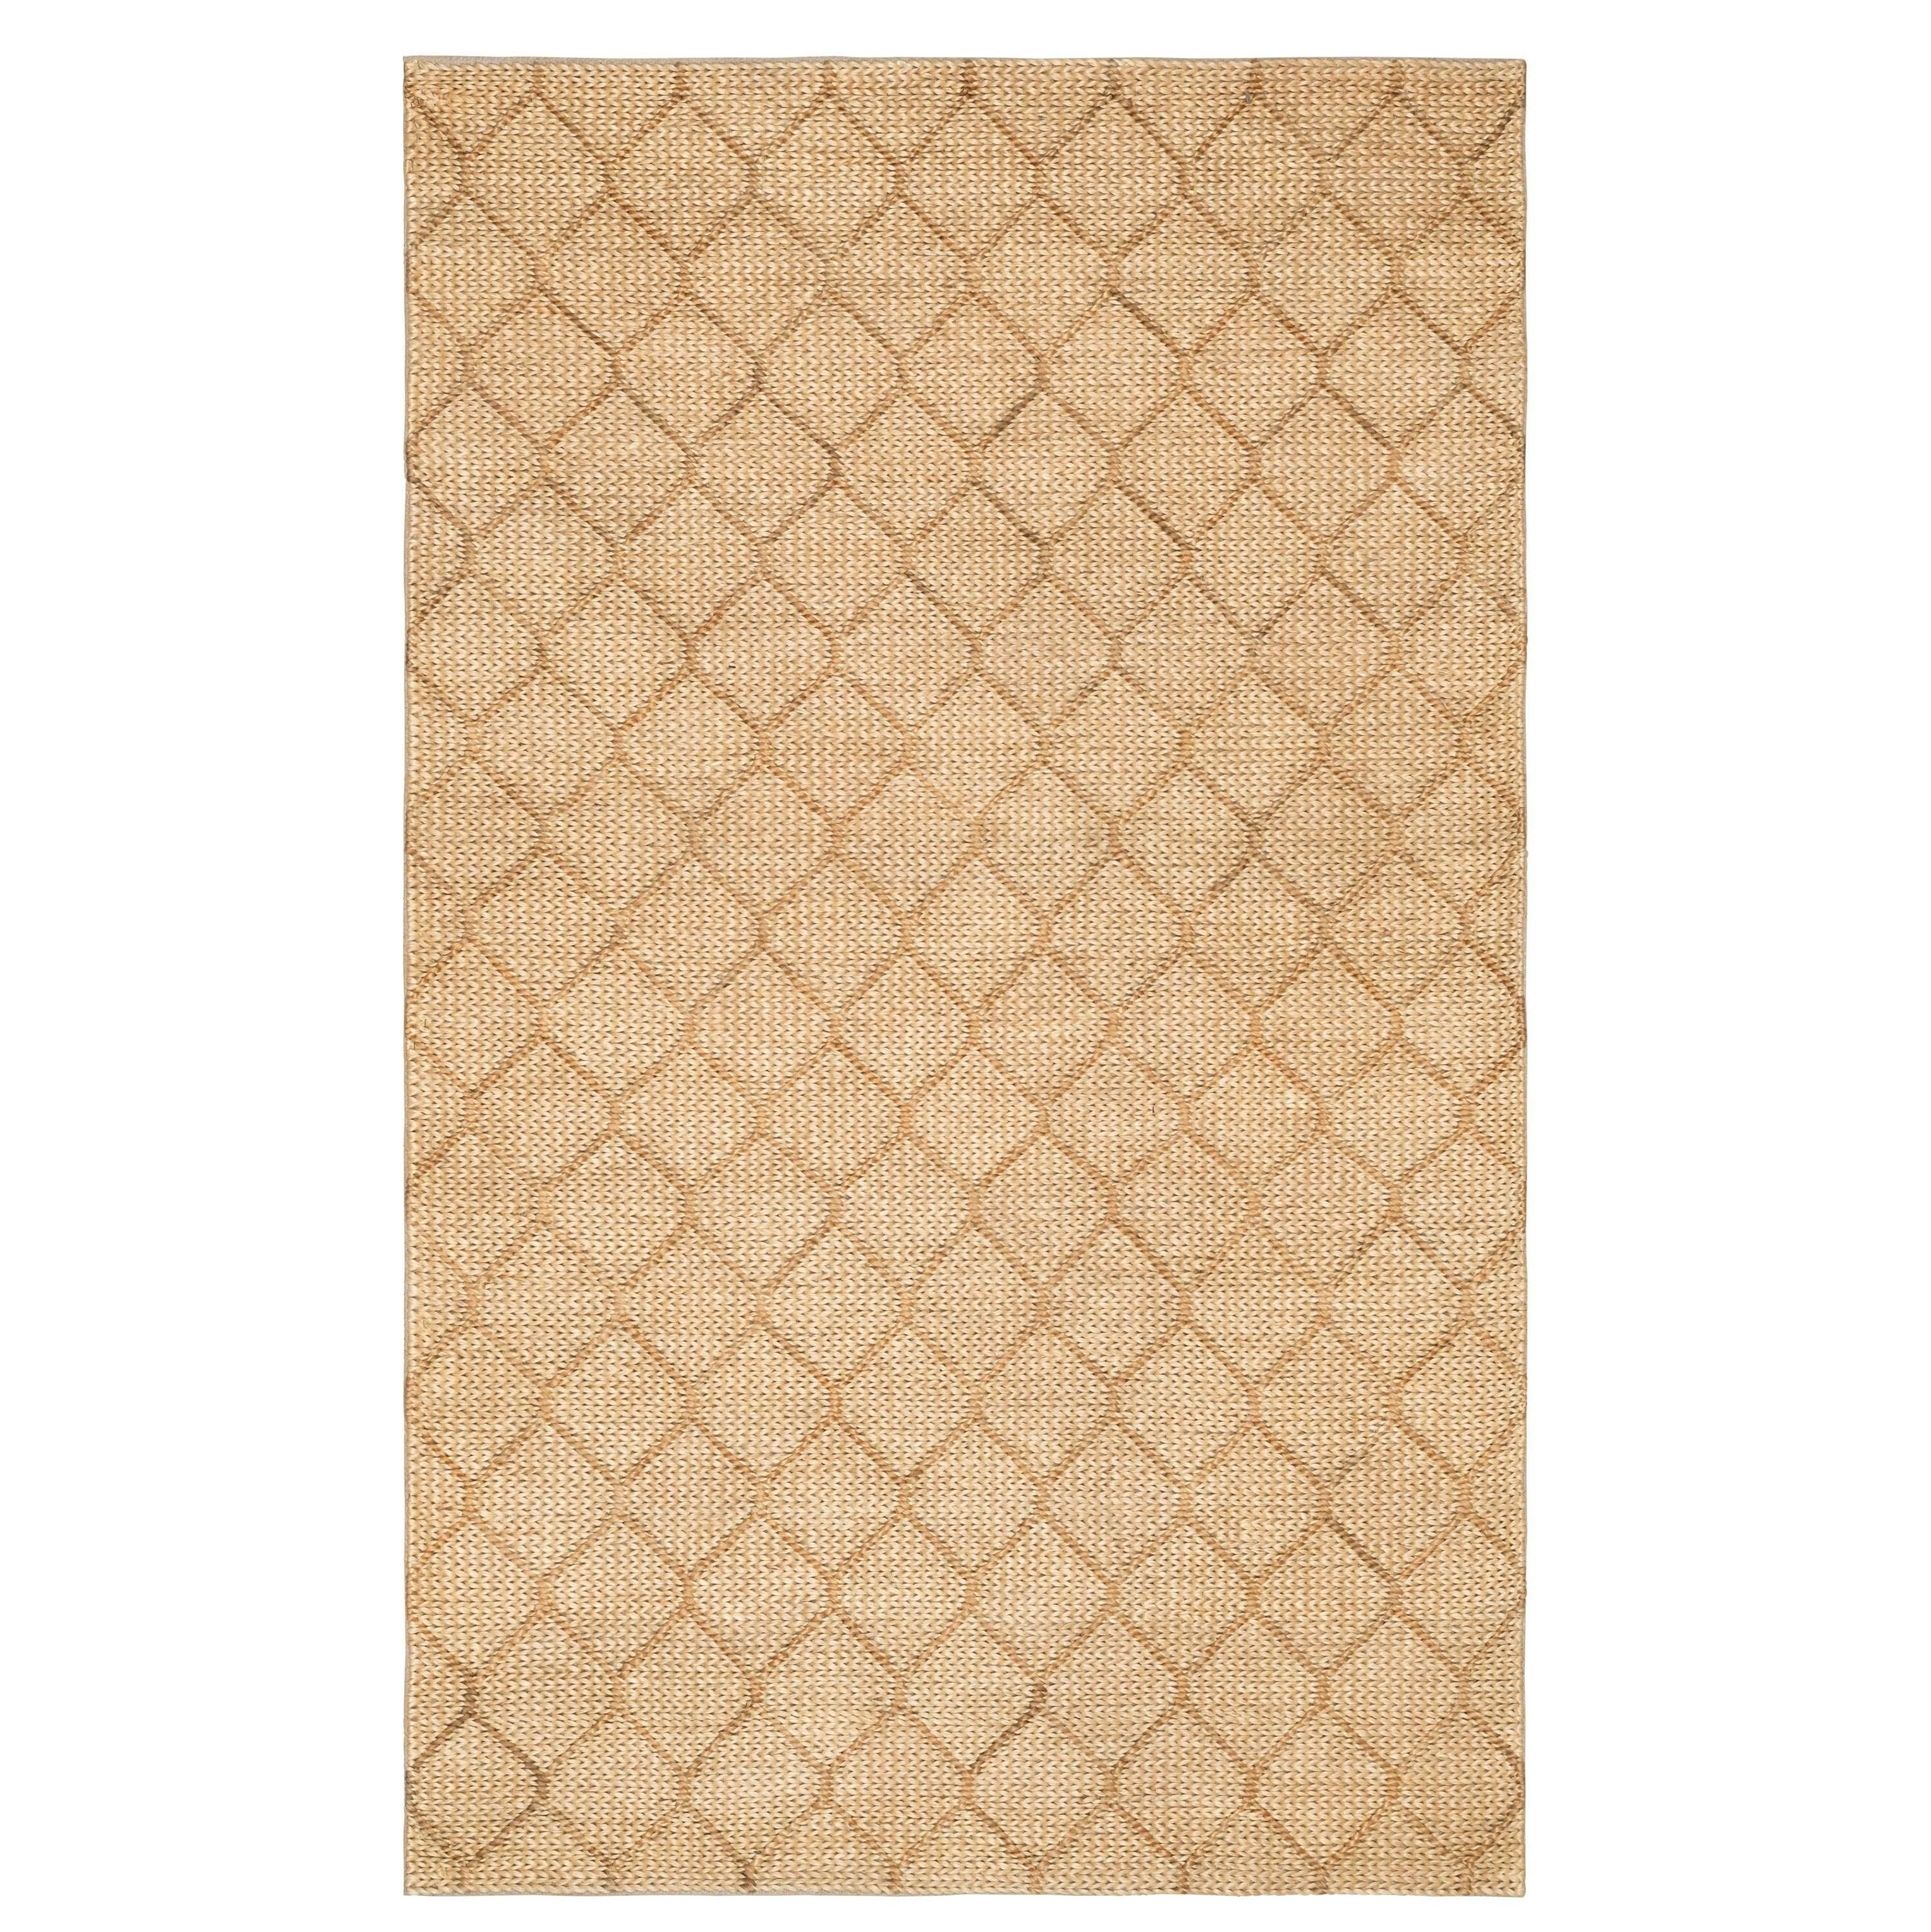 Tiles Ivory Handwoven Jute 5' x 8' Rectangular Area Rug